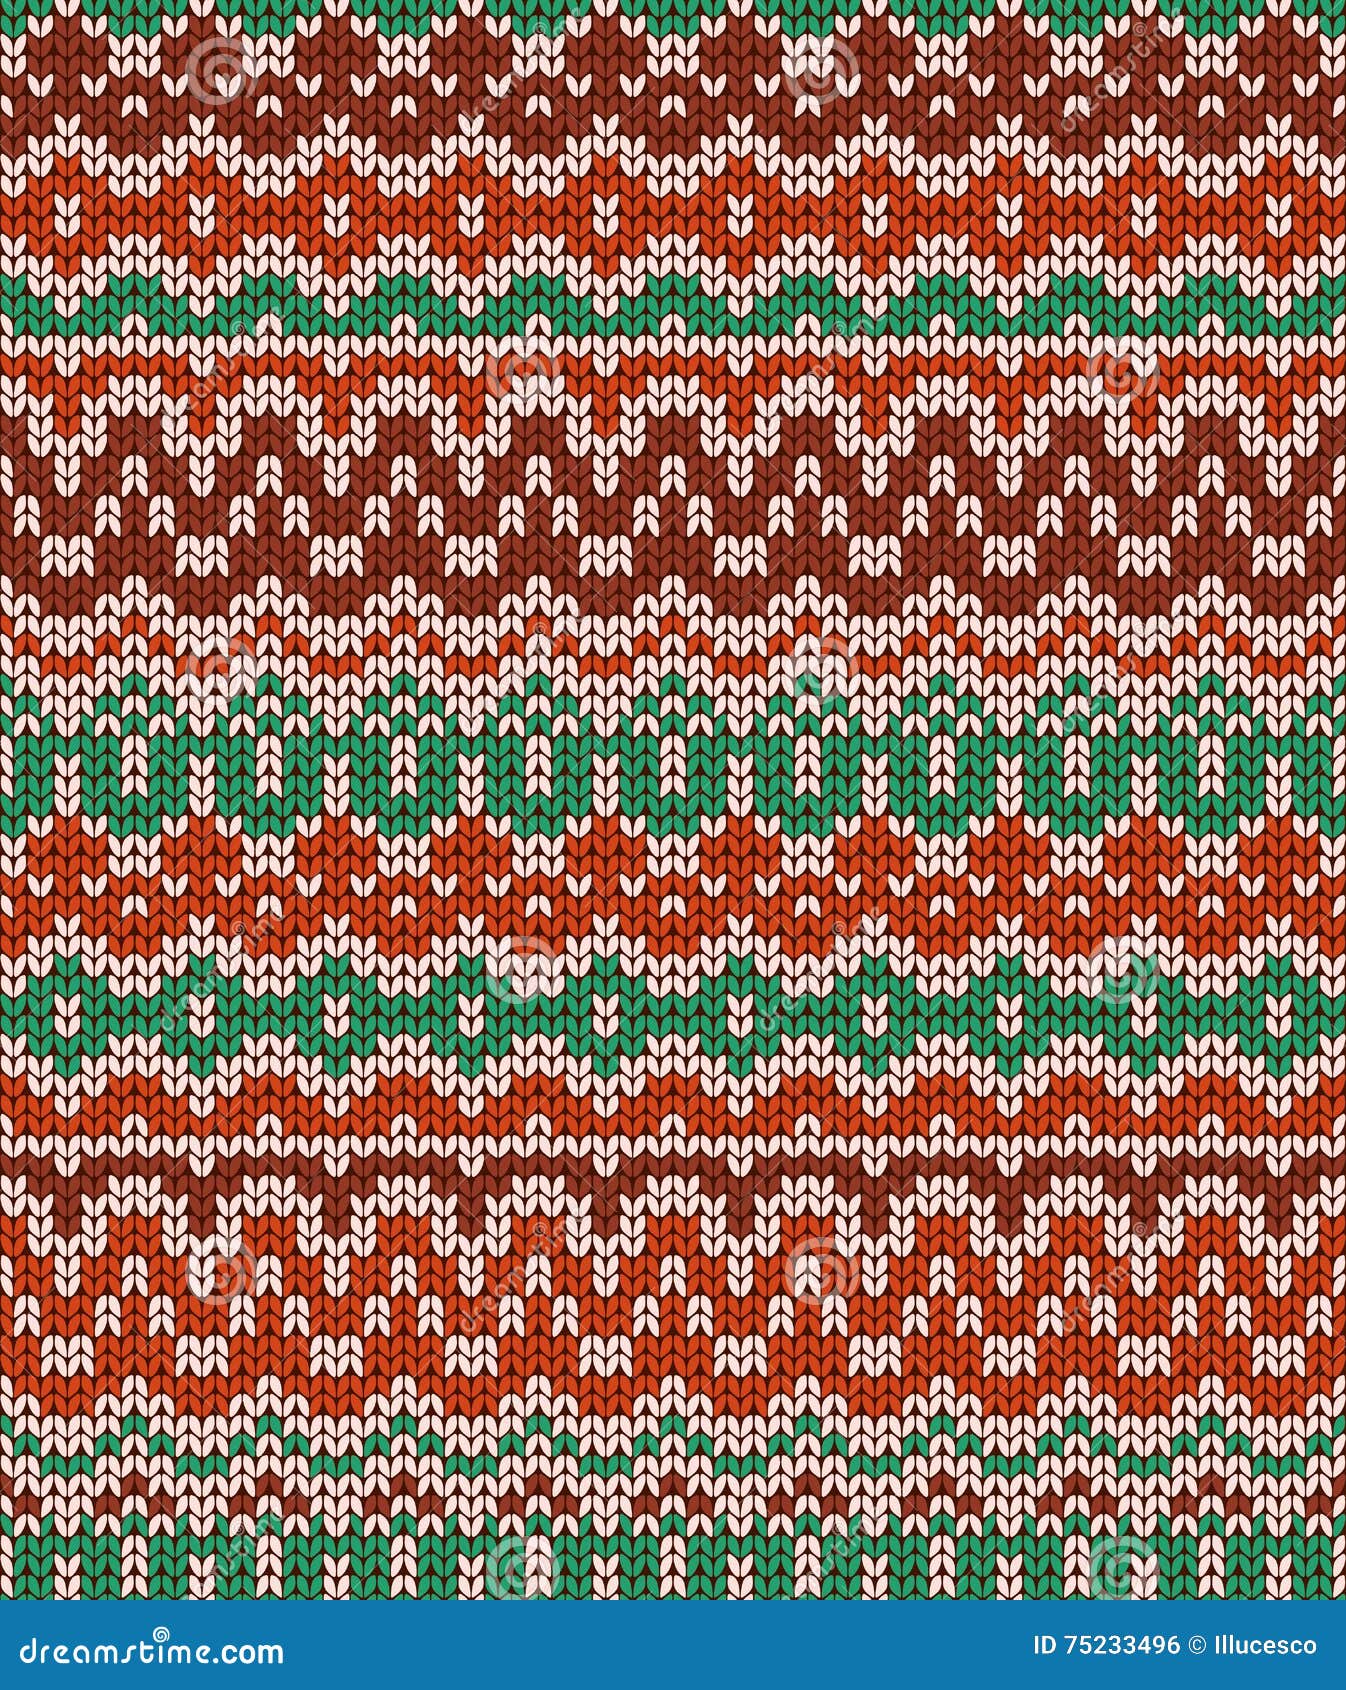 Knit pattern wallpaper